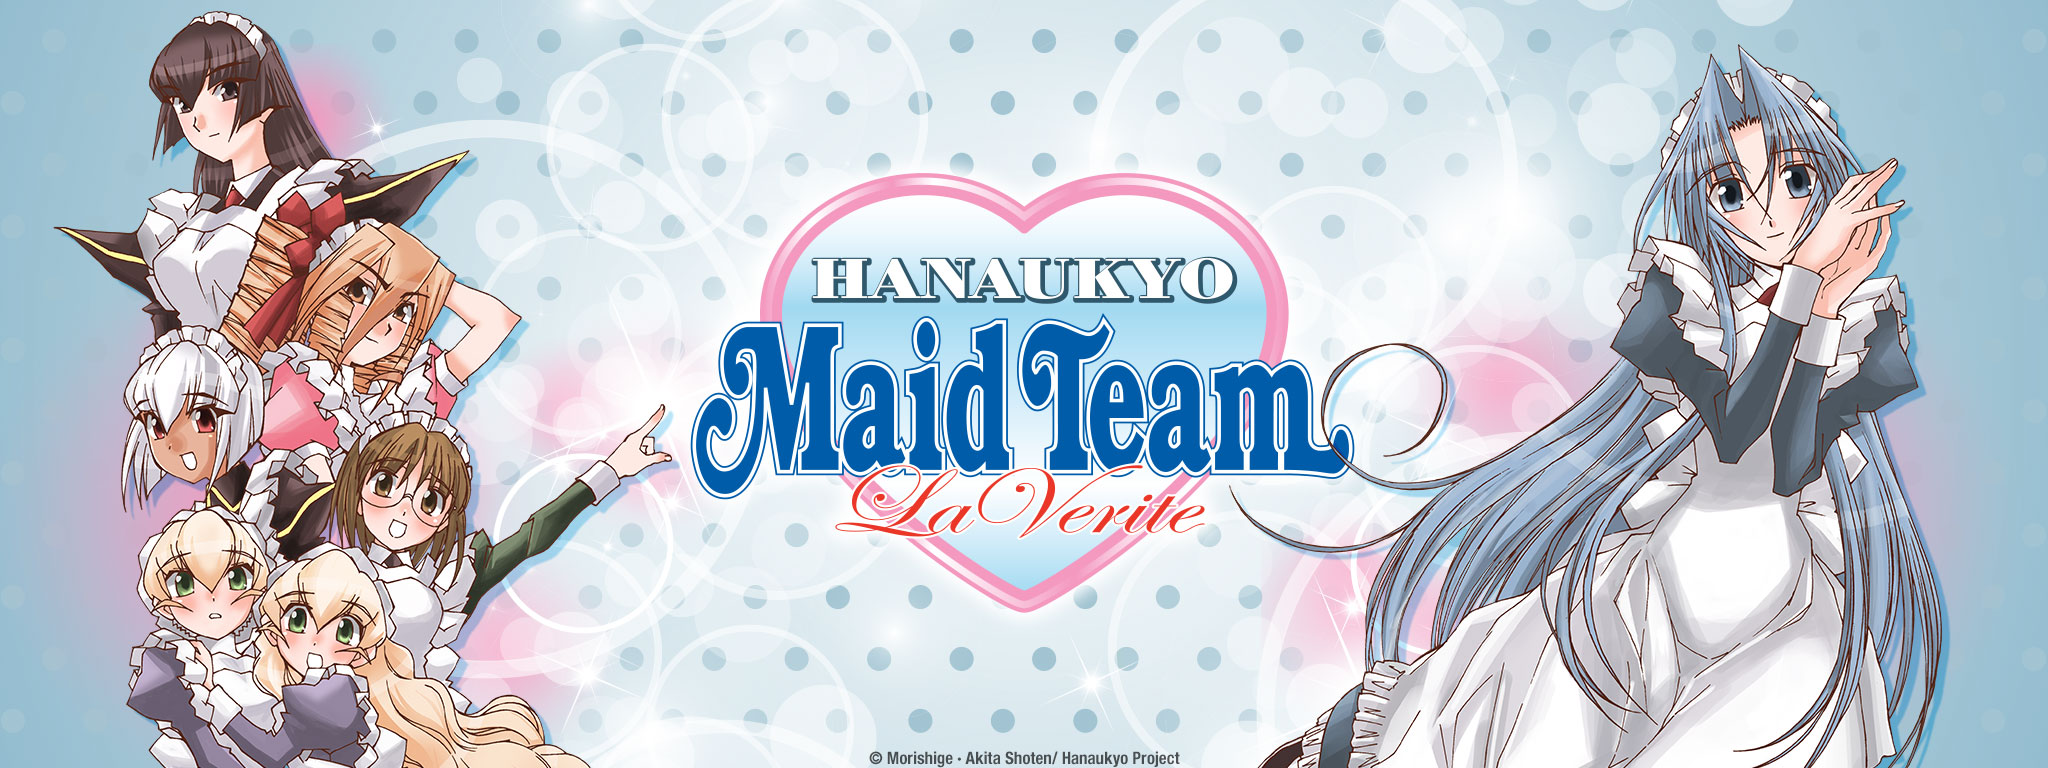 Title Art for Hanaukyo Maid Team: La Verite